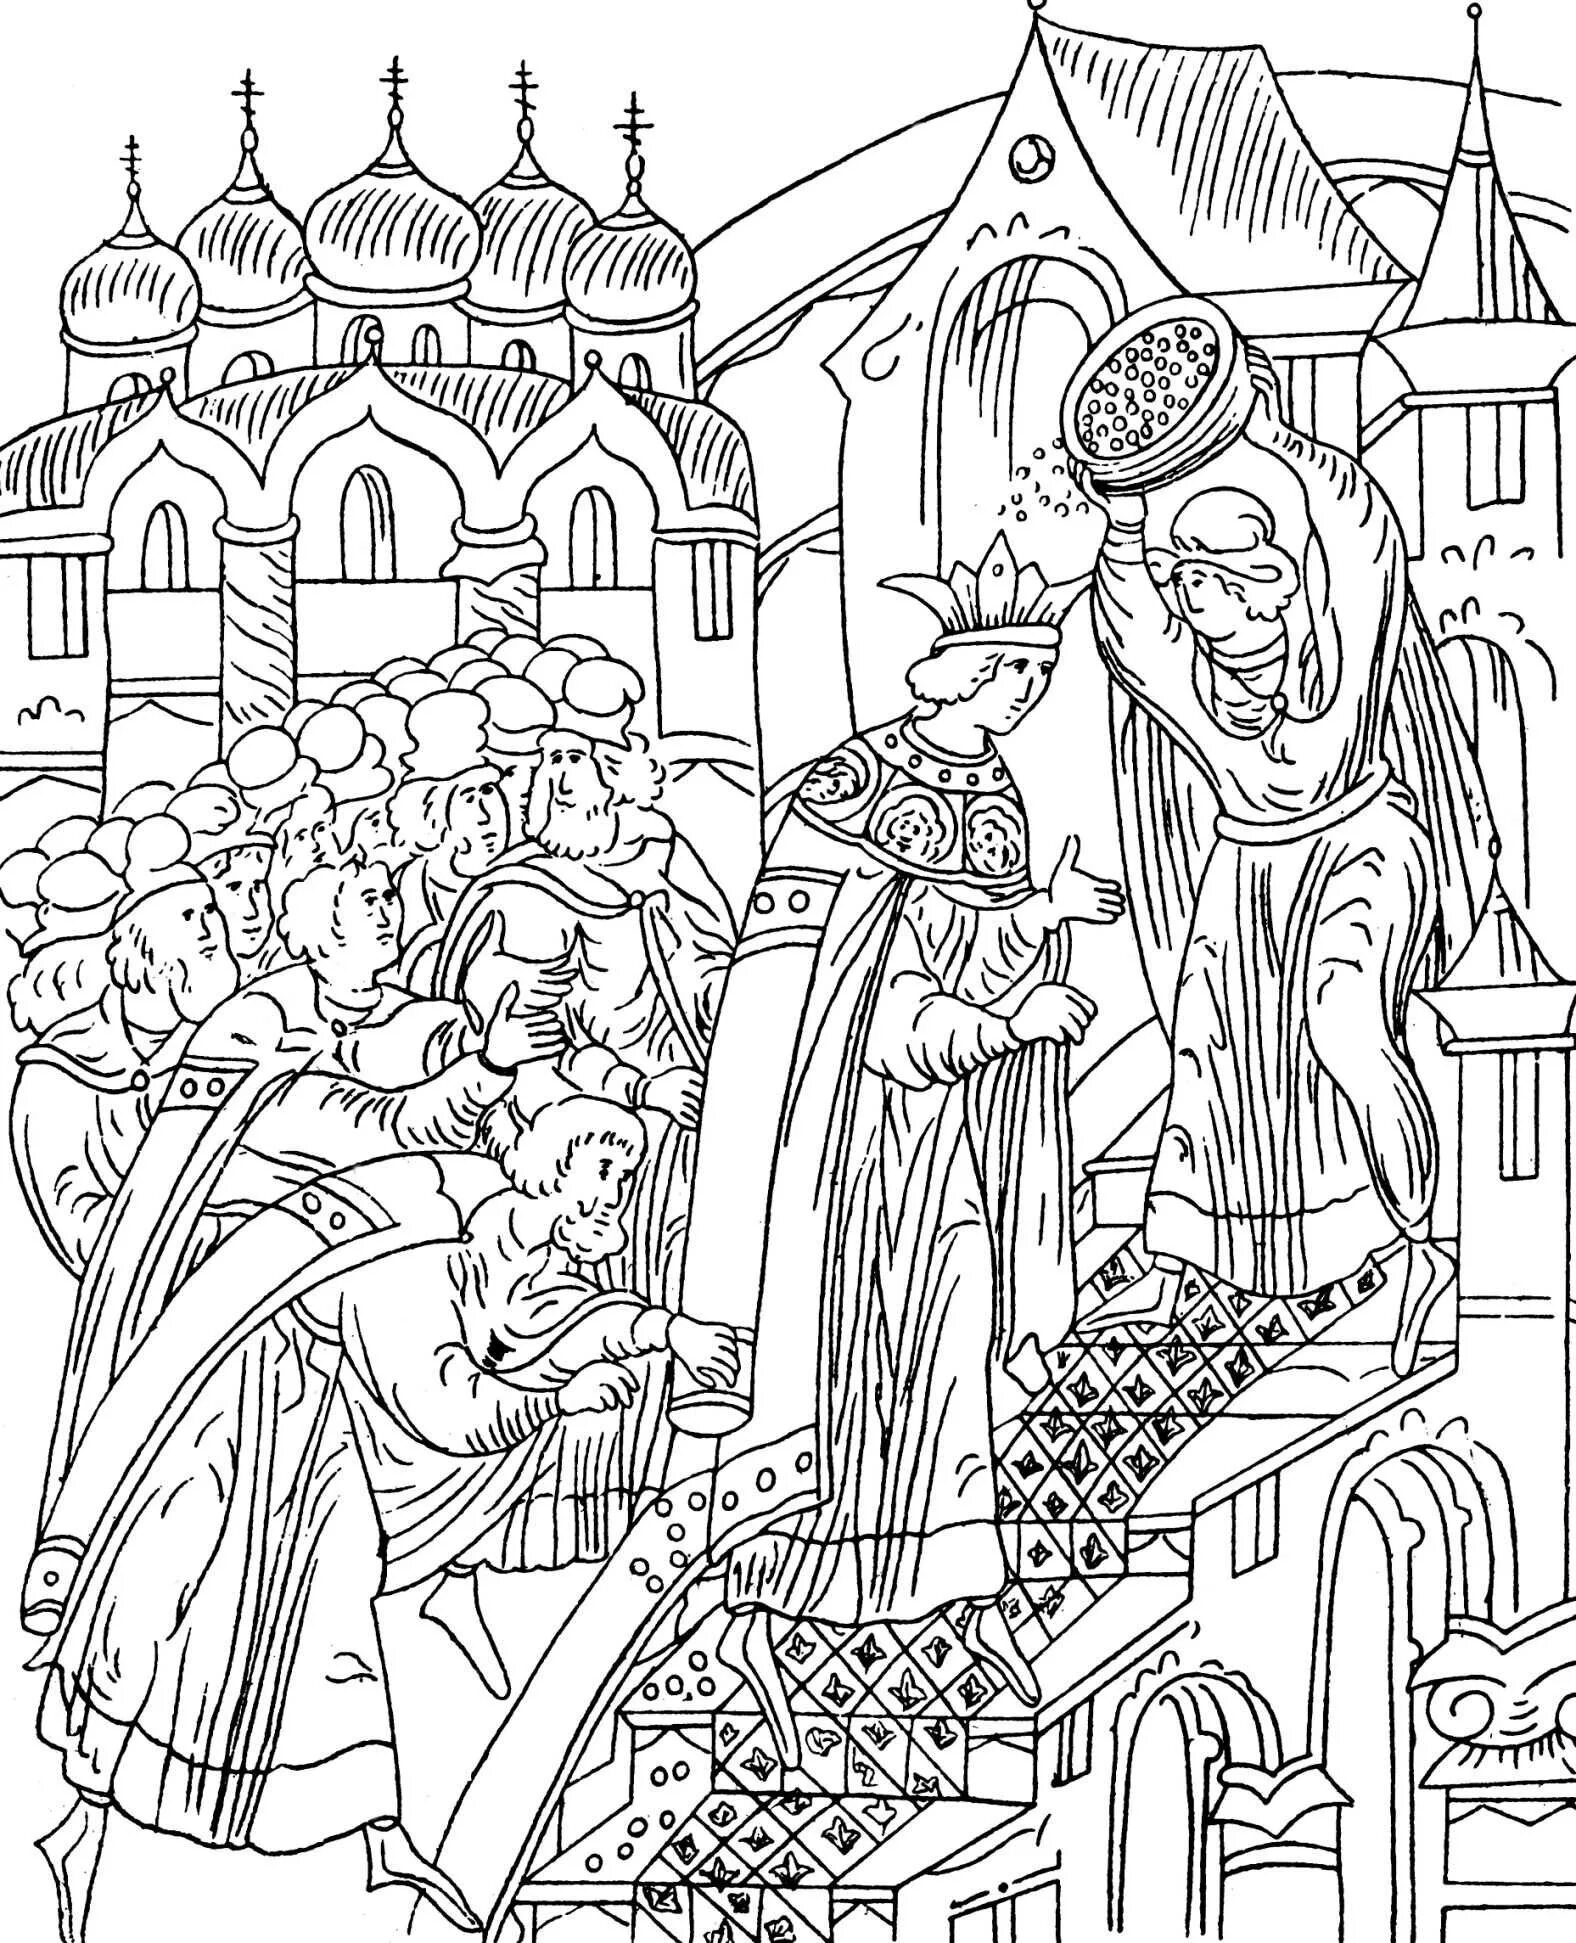 1547 г россия. 1547 Венчание Ивана Грозного на царство. 1547 Венчание Ивана Грозного. Венчание Ивана IV Грозного на царство - 1547 г.